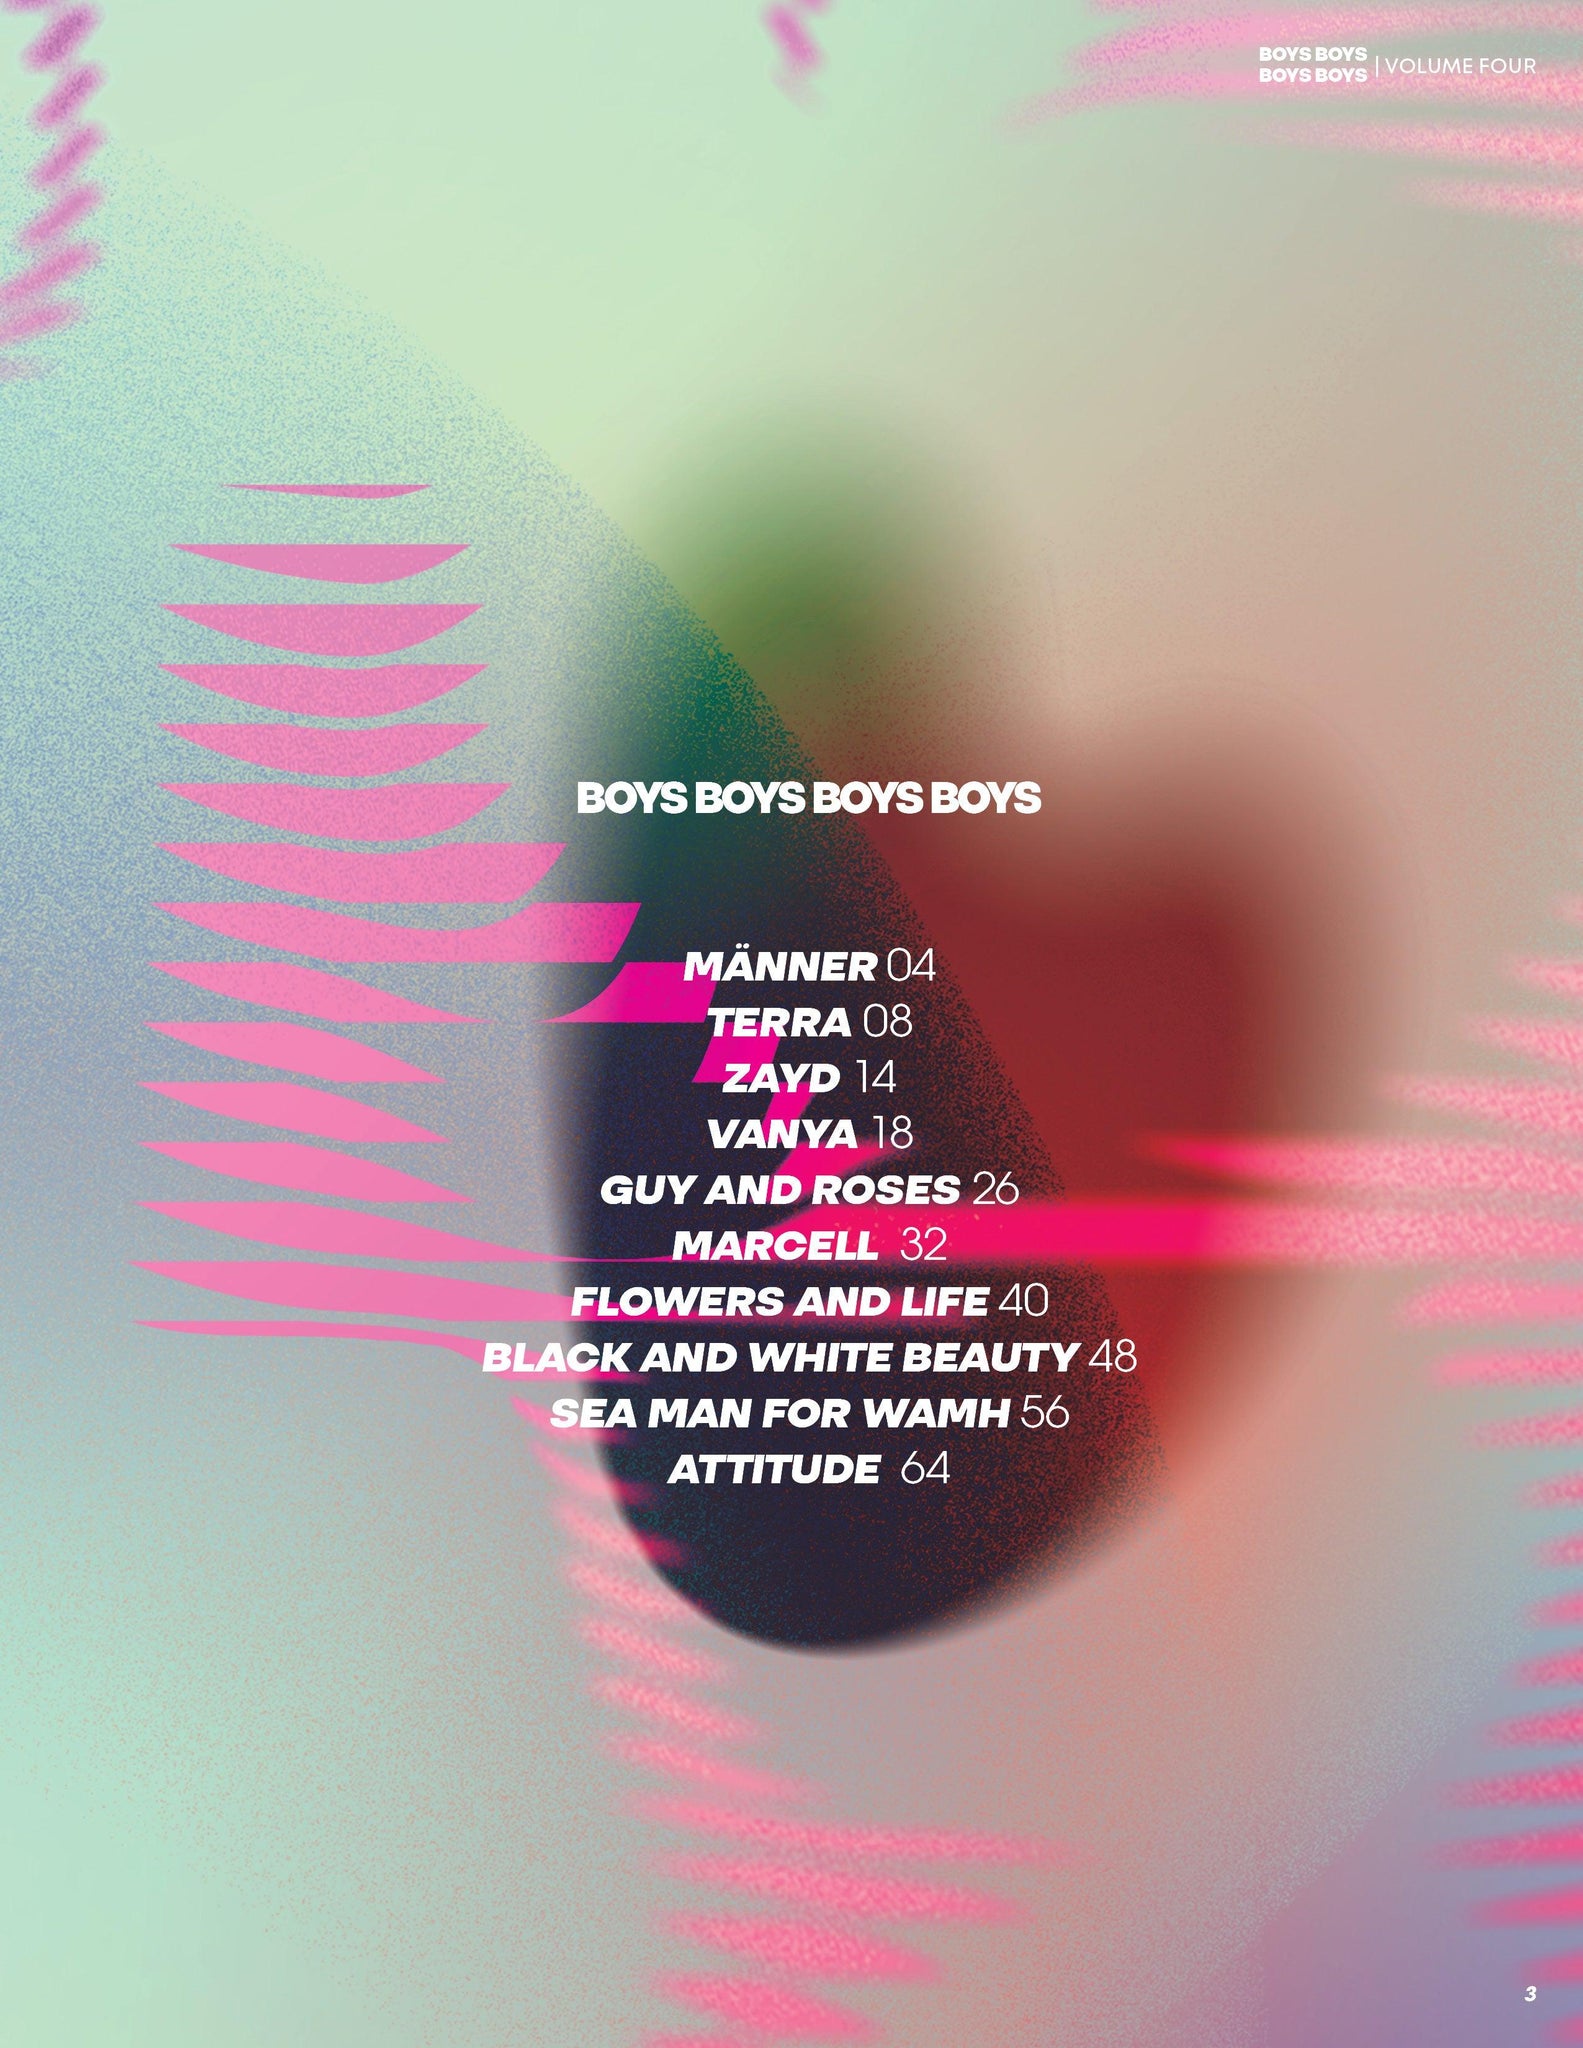 BOYS BOYS BOYS BOYS | VOLUME FOUR | ISSUE #02 - Mob Journal